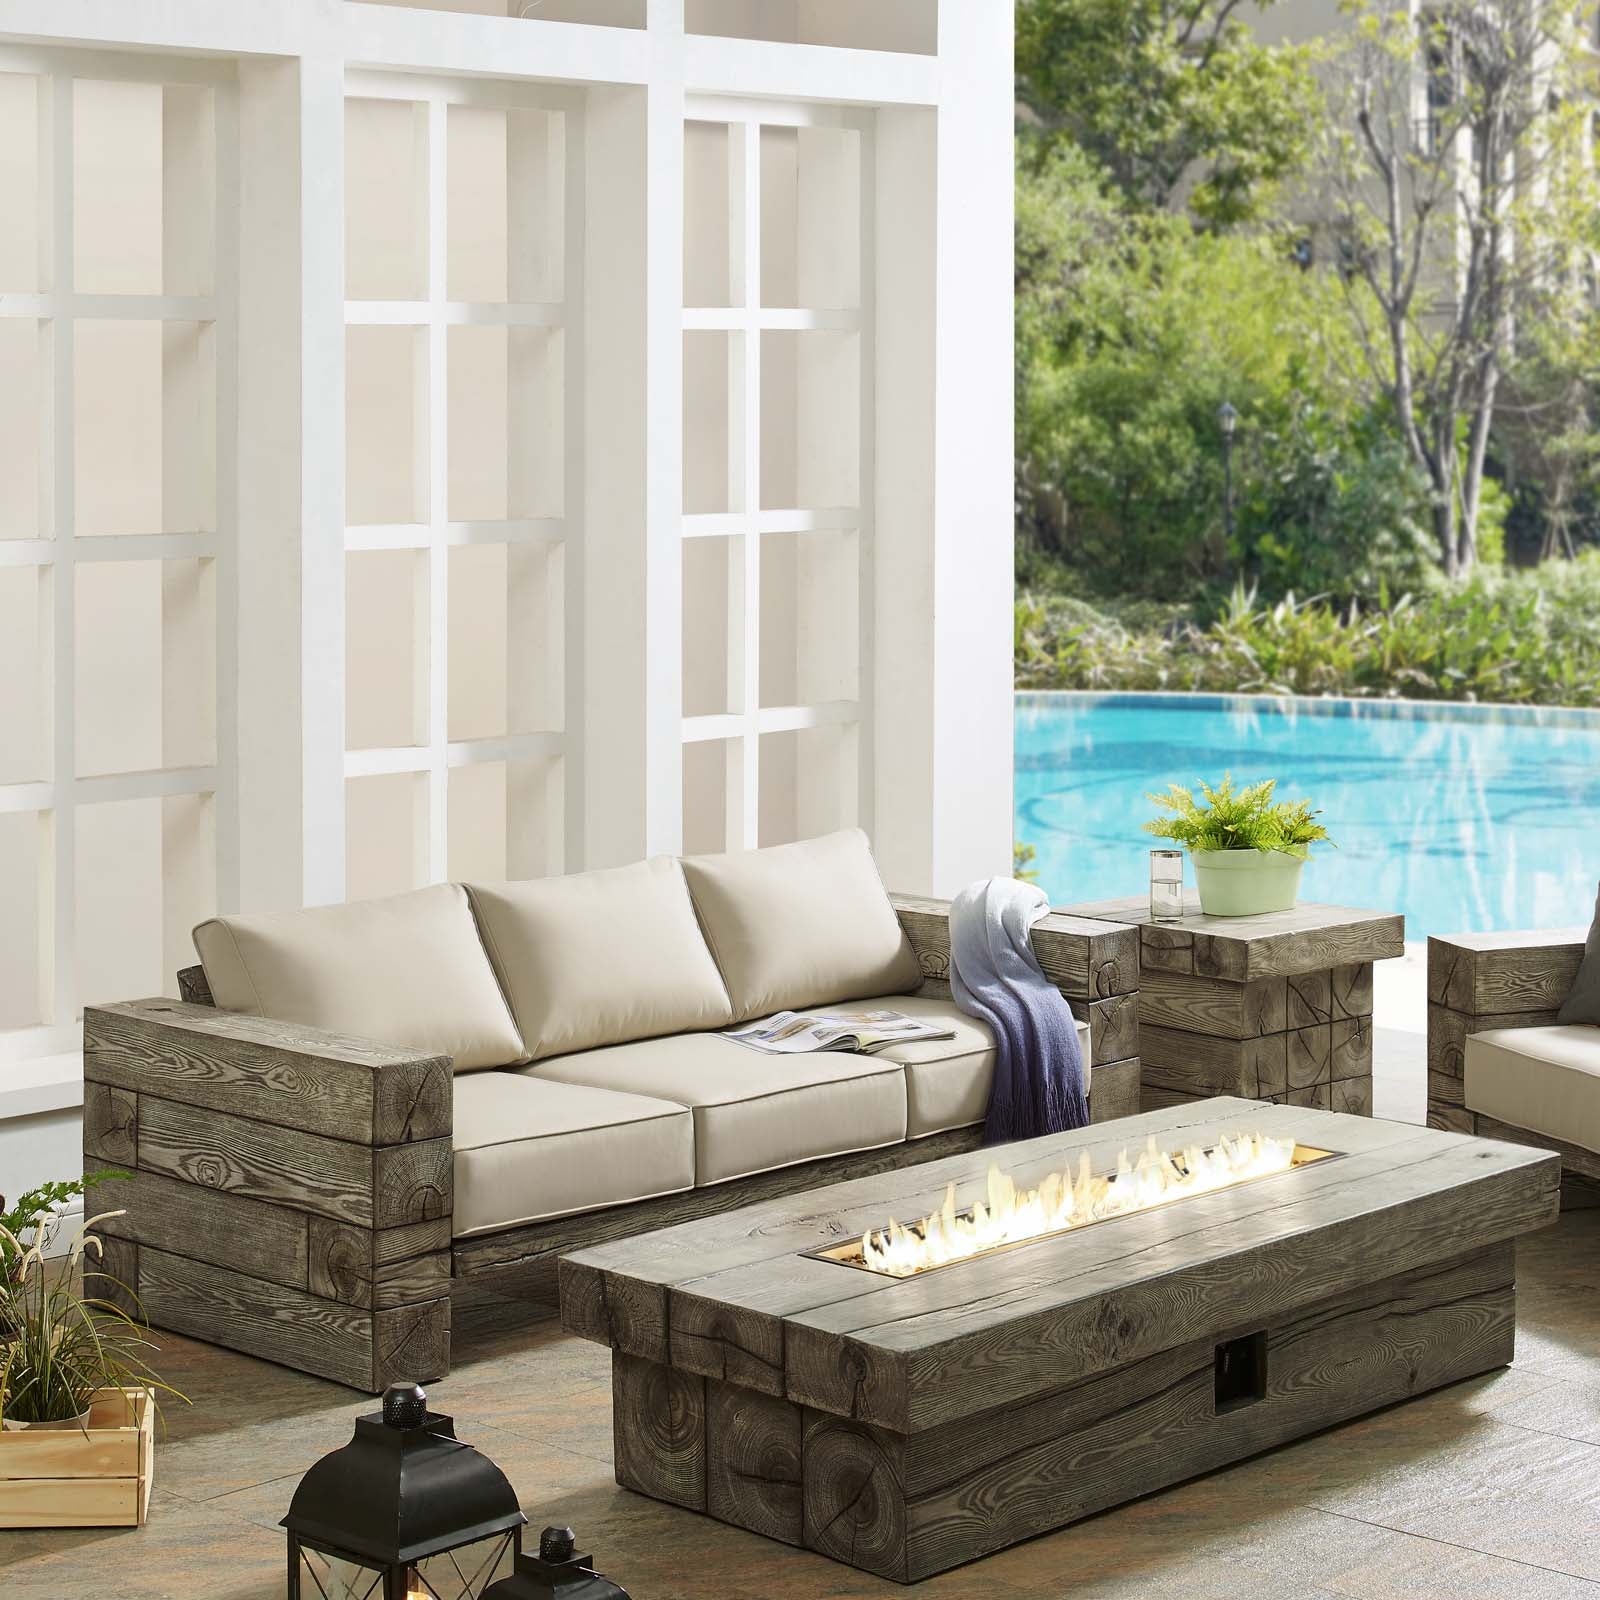 Manteo Rustic Coastal Outdoor Patio Sunbrella® Sofa and Fire Pit Set